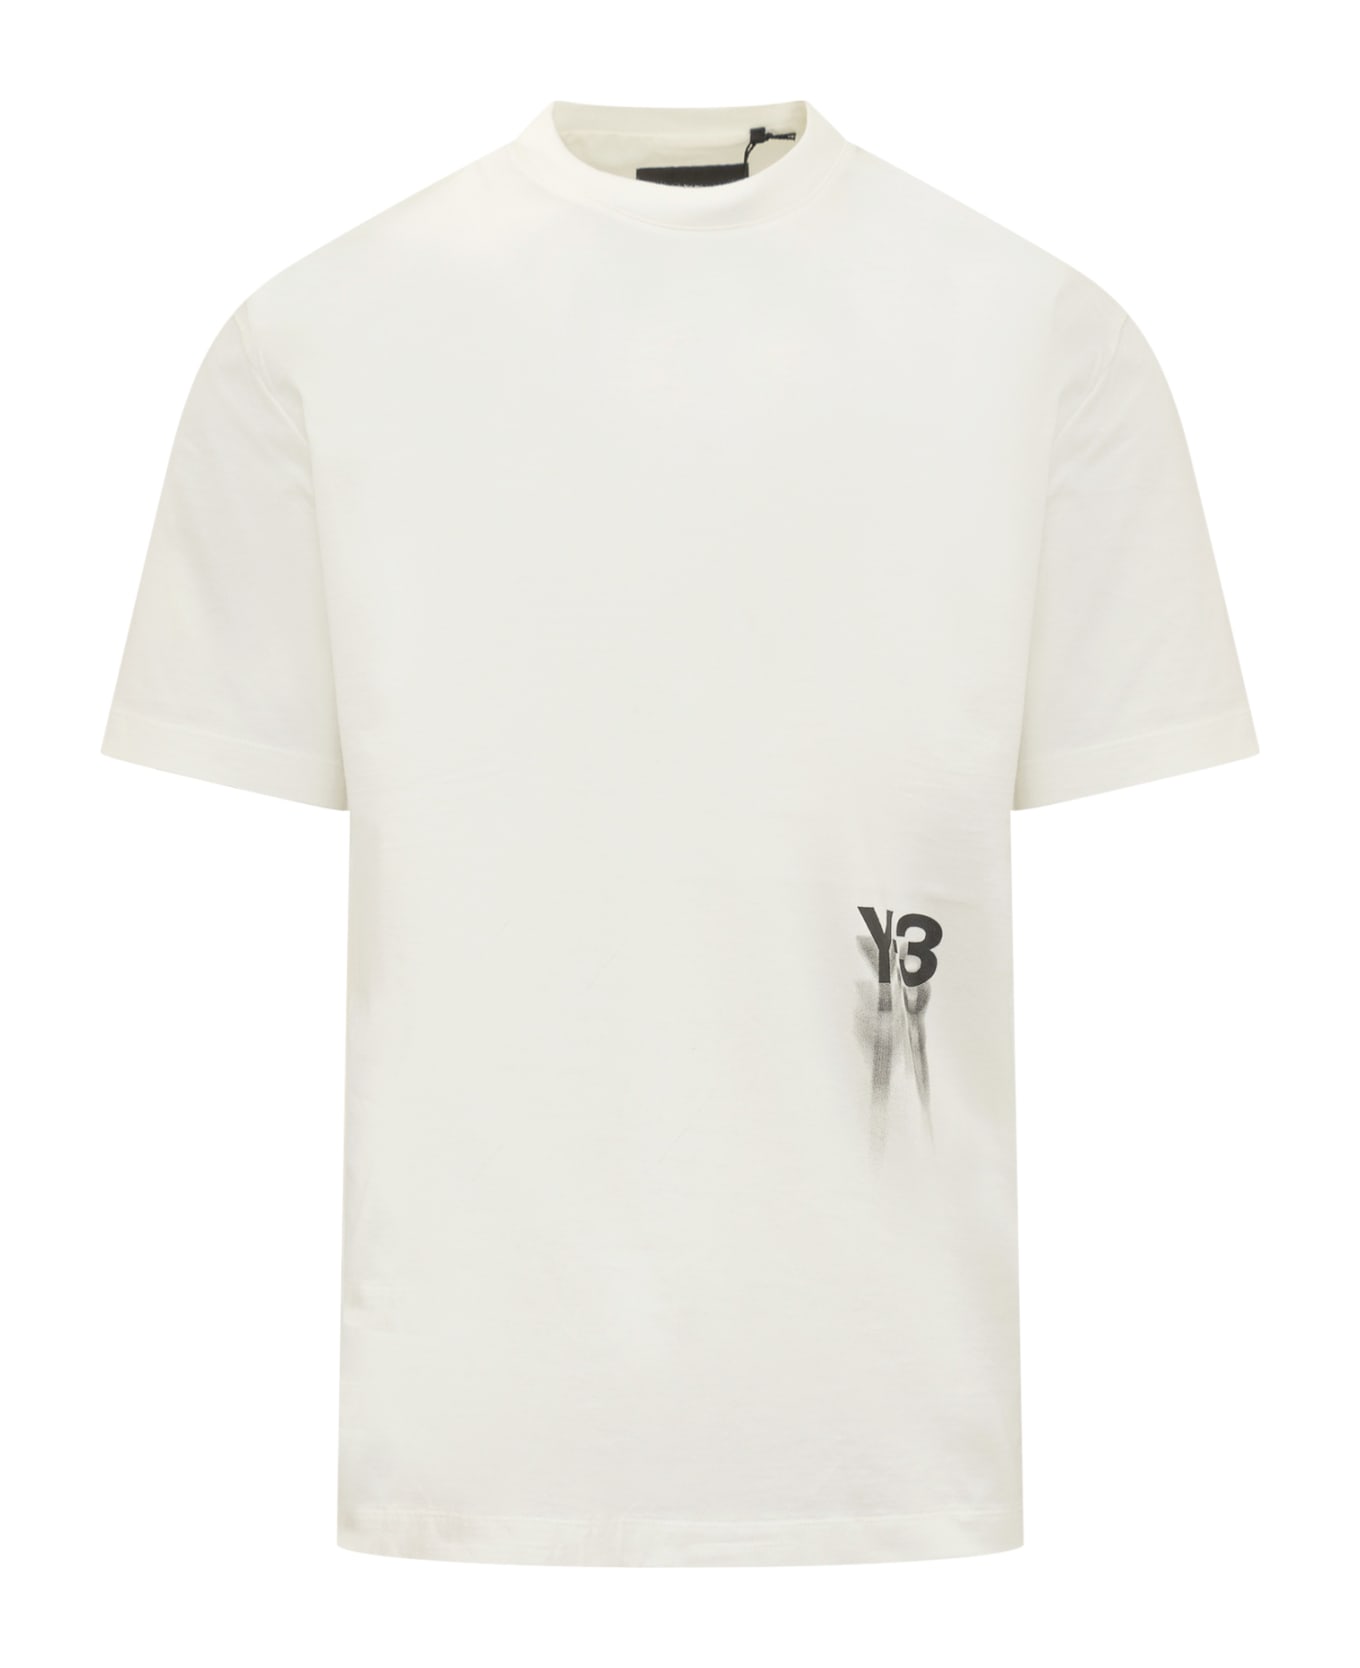 Y-3 Gfx T-shirt - White